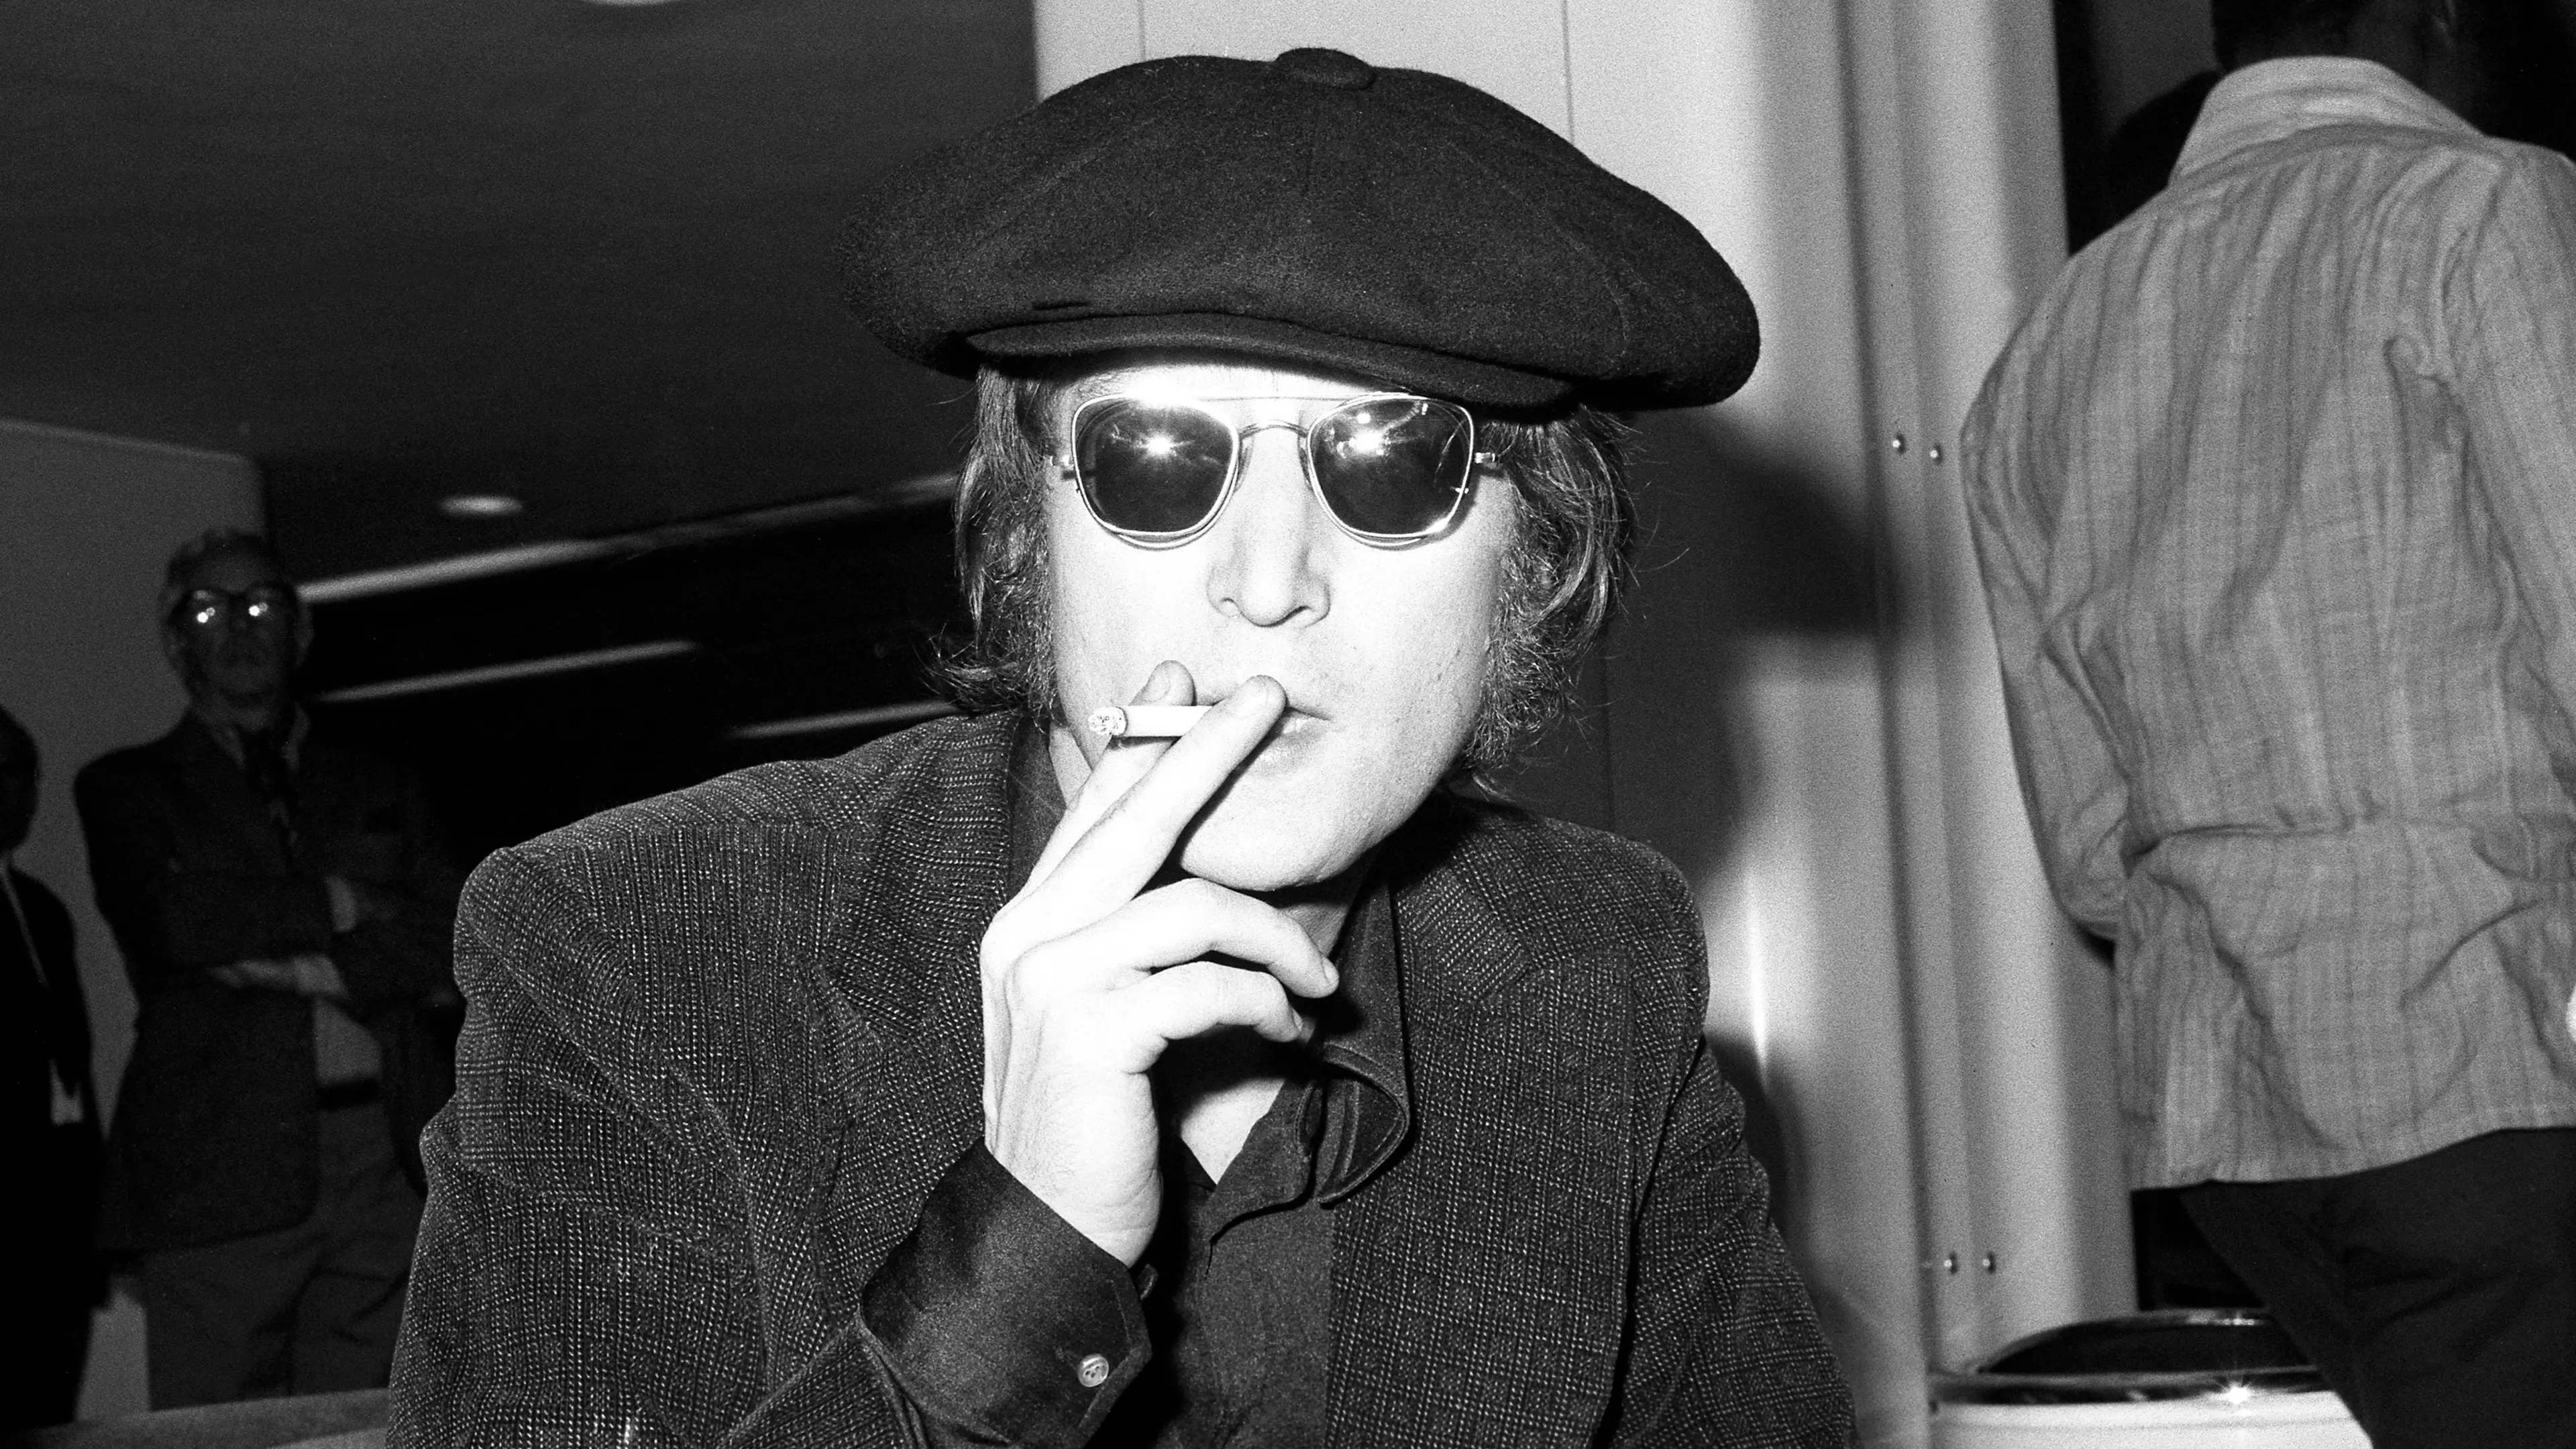 Wife Of John Lennon’s Killer Claims He Told Her About The Murder Plot 